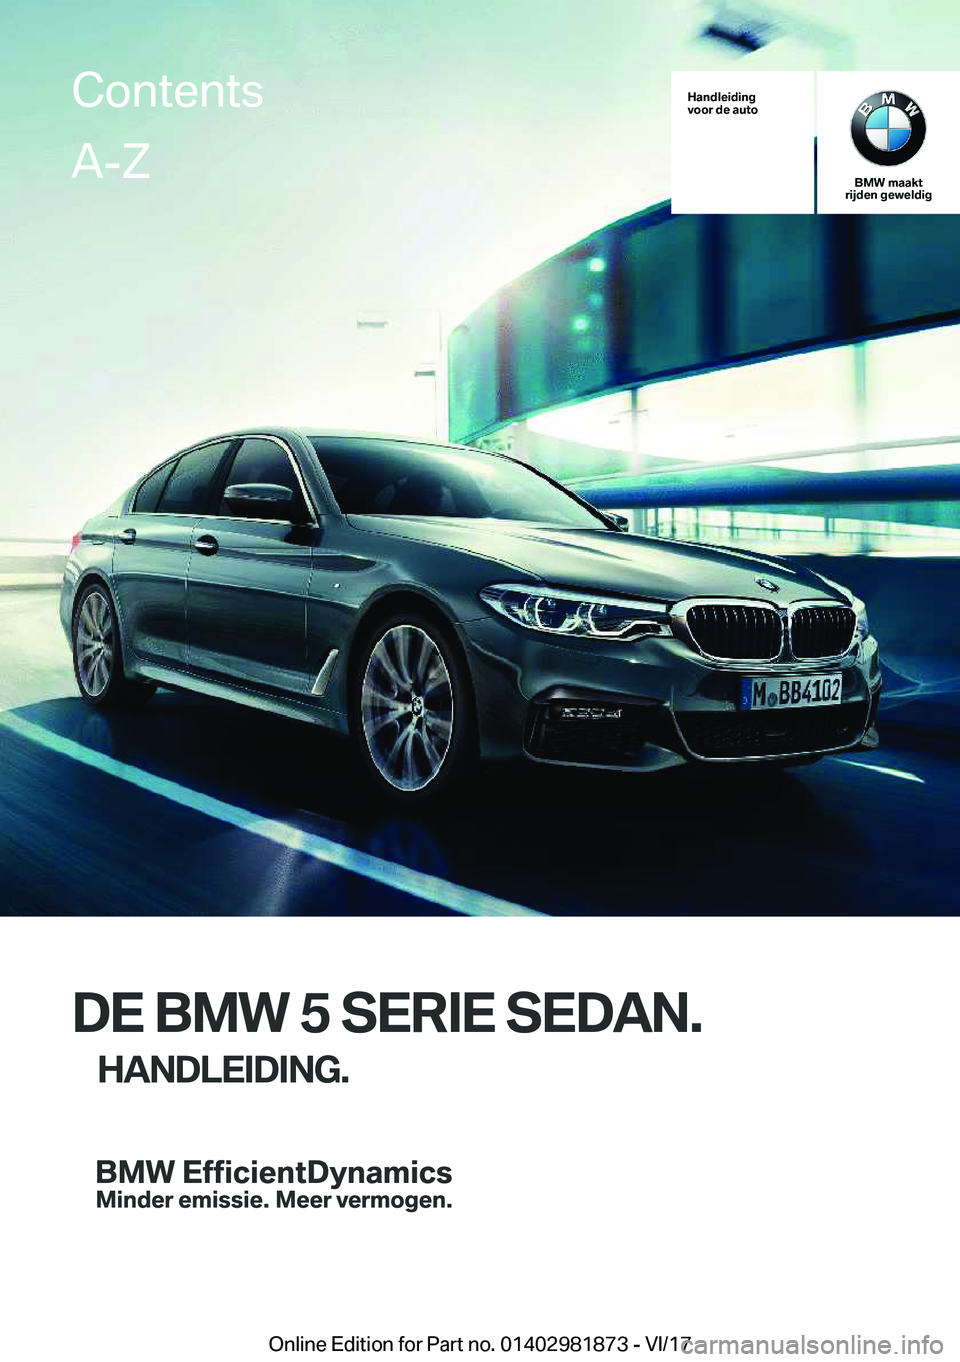 BMW 5 SERIES 2018  Instructieboekjes (in Dutch) �H�a�n�d�l�e�i�d�i�n�g
�v�o�o�r��d�e��a�u�t�o
�B�M�W��m�a�a�k�t
�r�i�j�d�e�n��g�e�w�e�l�d�i�g
�D�E��B�M�W��5��S�E�R�I�E��S�E�D�A�N�.
�H�A�N�D�L�E�I�D�I�N�G�.
�C�o�n�t�e�n�t�s�A�-�Z
�O�n�l�i�n�